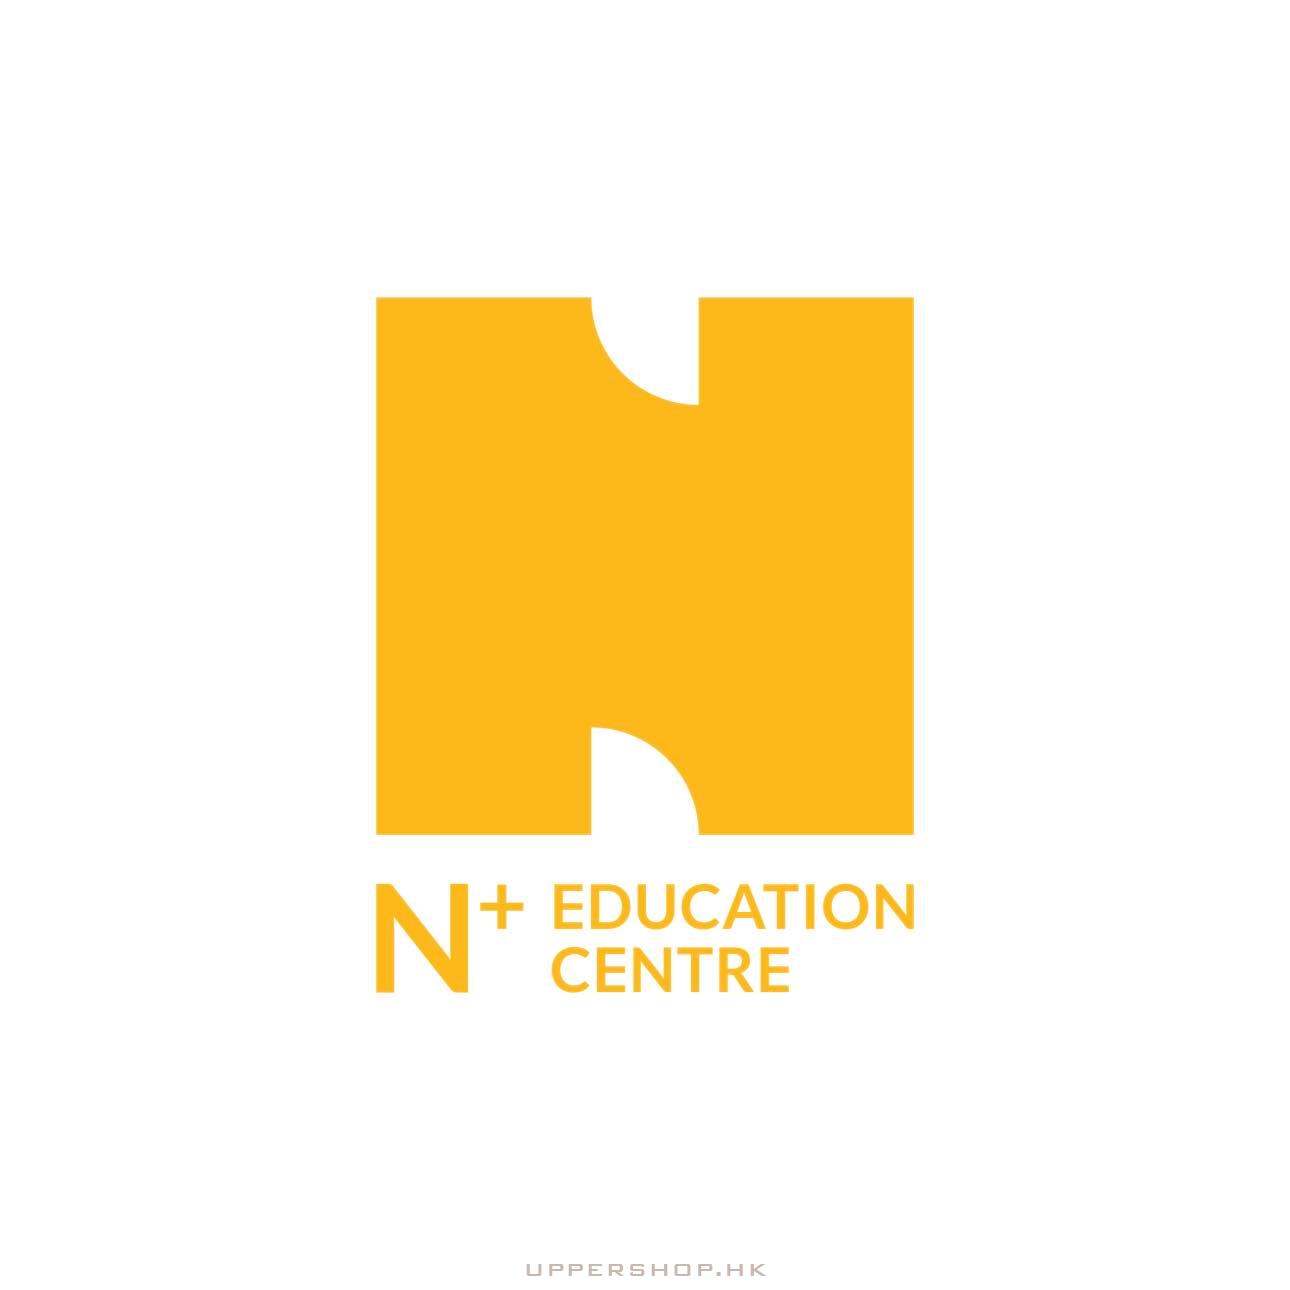 N+ Education Centre